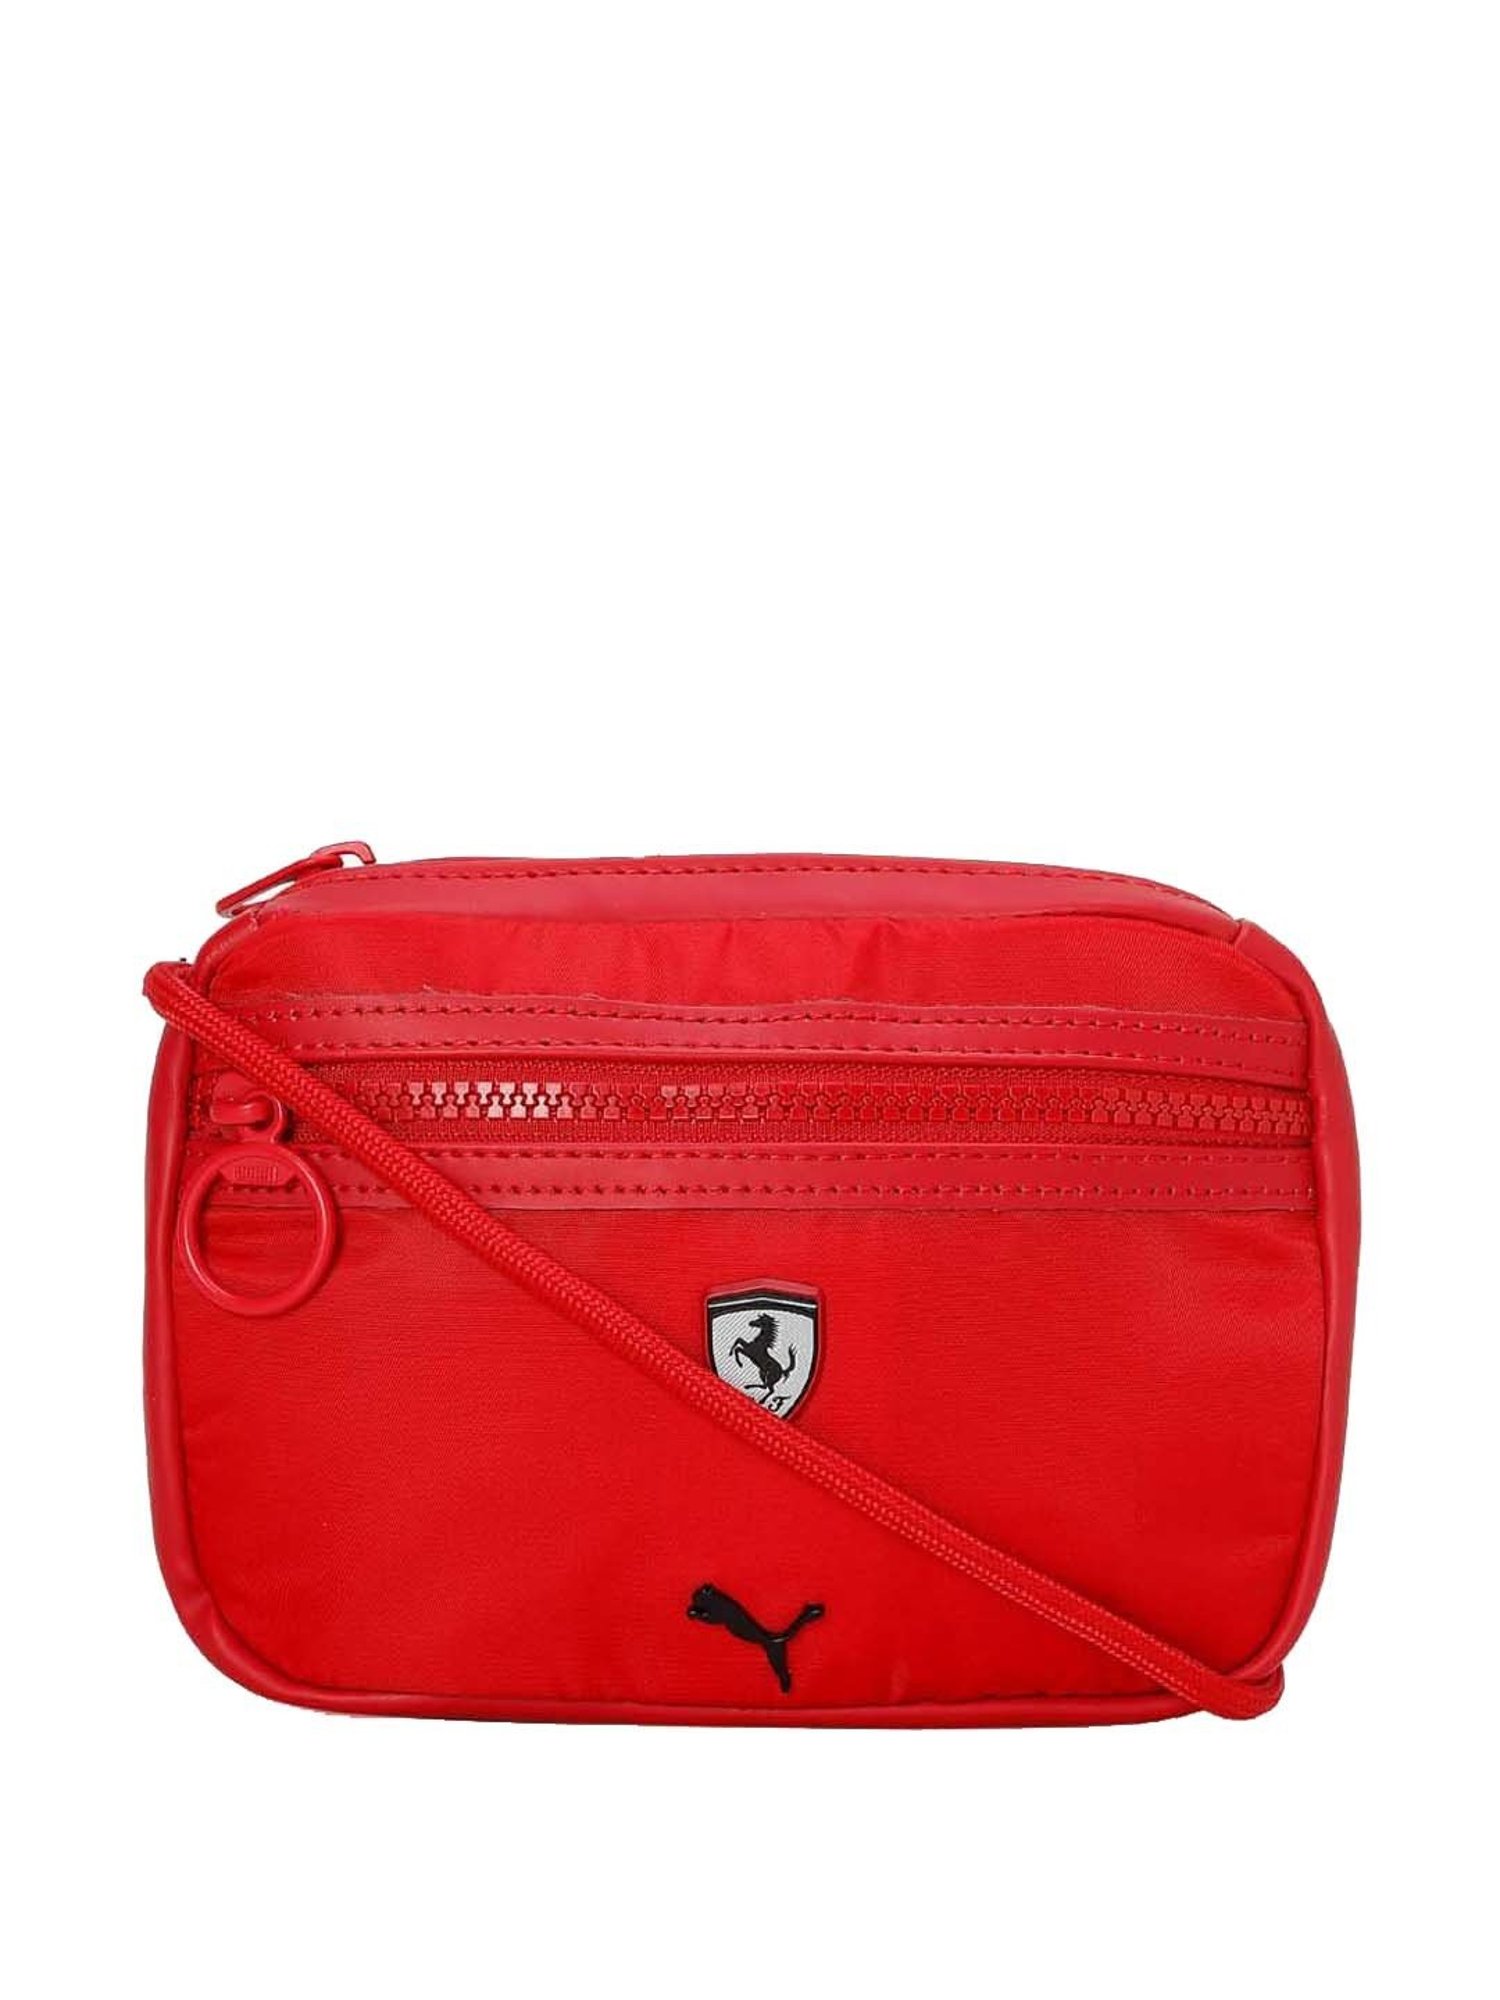 Red Ferrari bag |